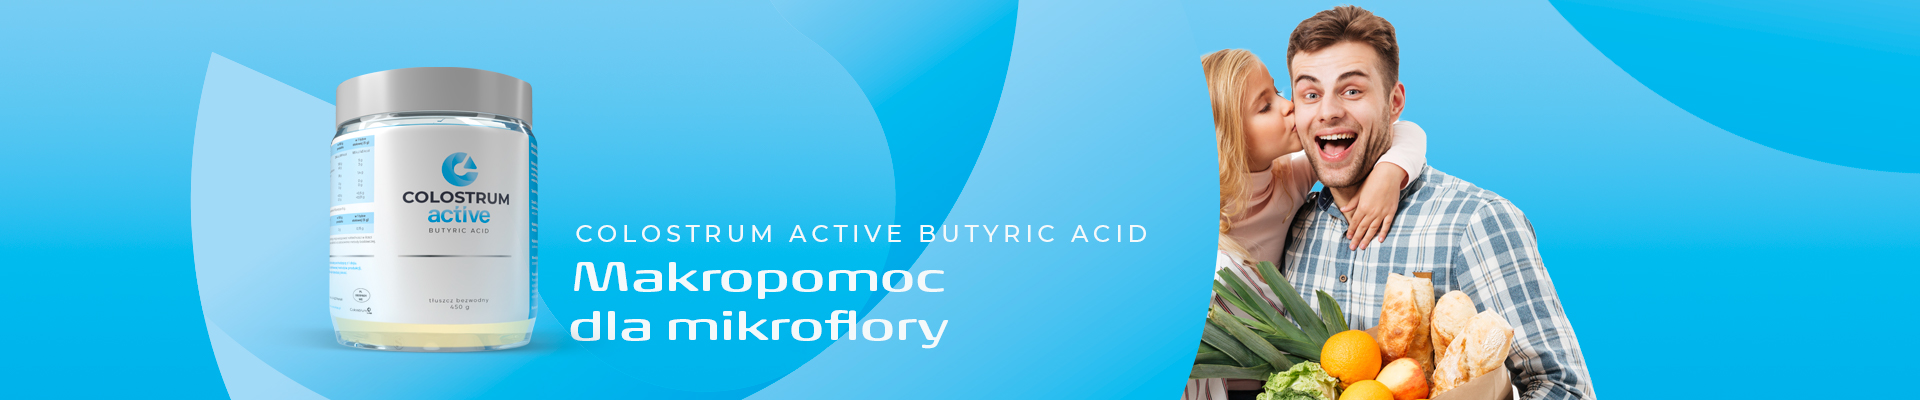 Colostrum Active Butyric Acid - tłuszcz - pomoc dla mikroflory